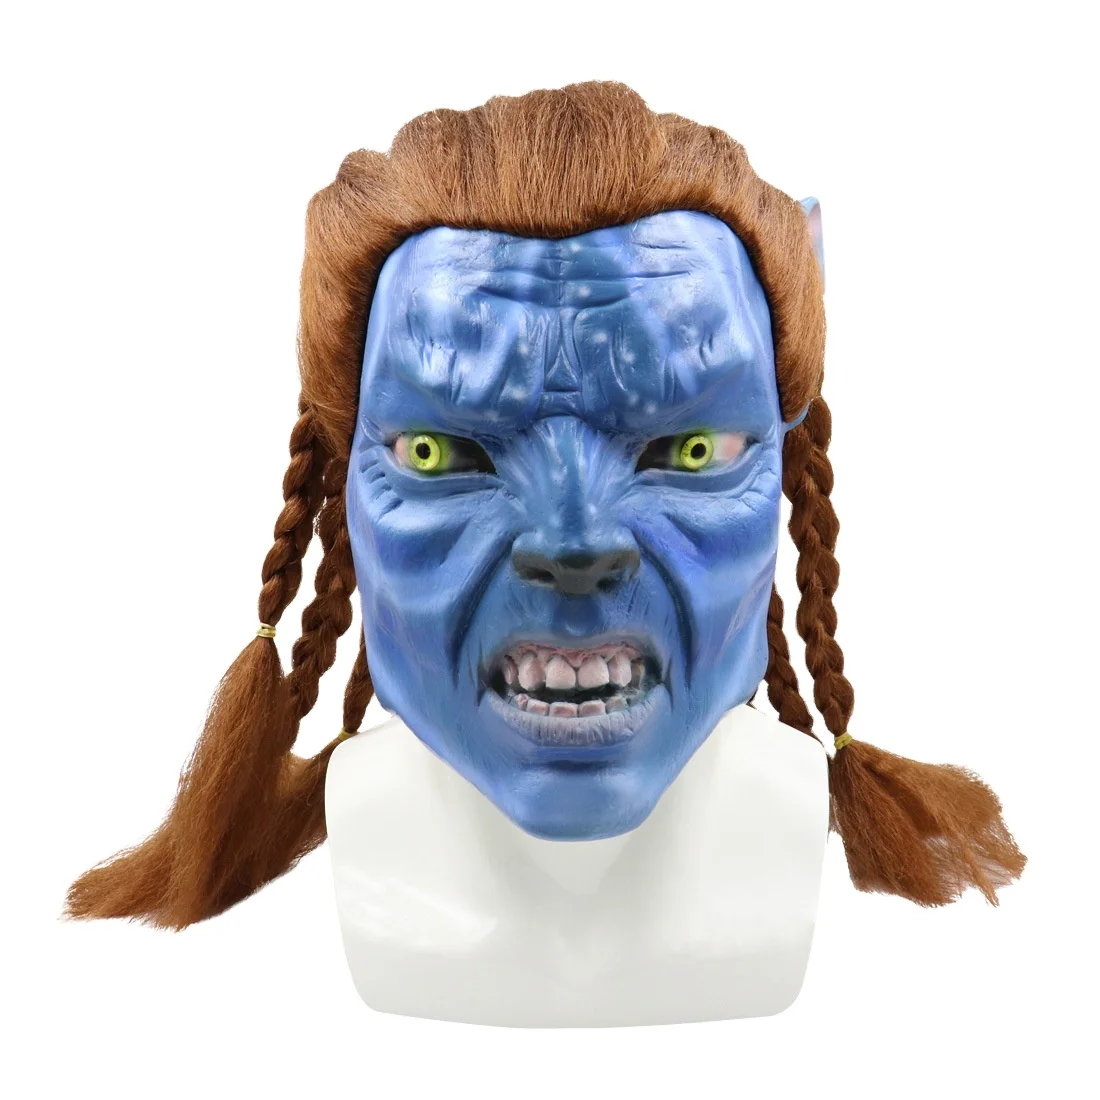 Jake Sully Avatar Child mask Of a Navi  HorrorShopcom